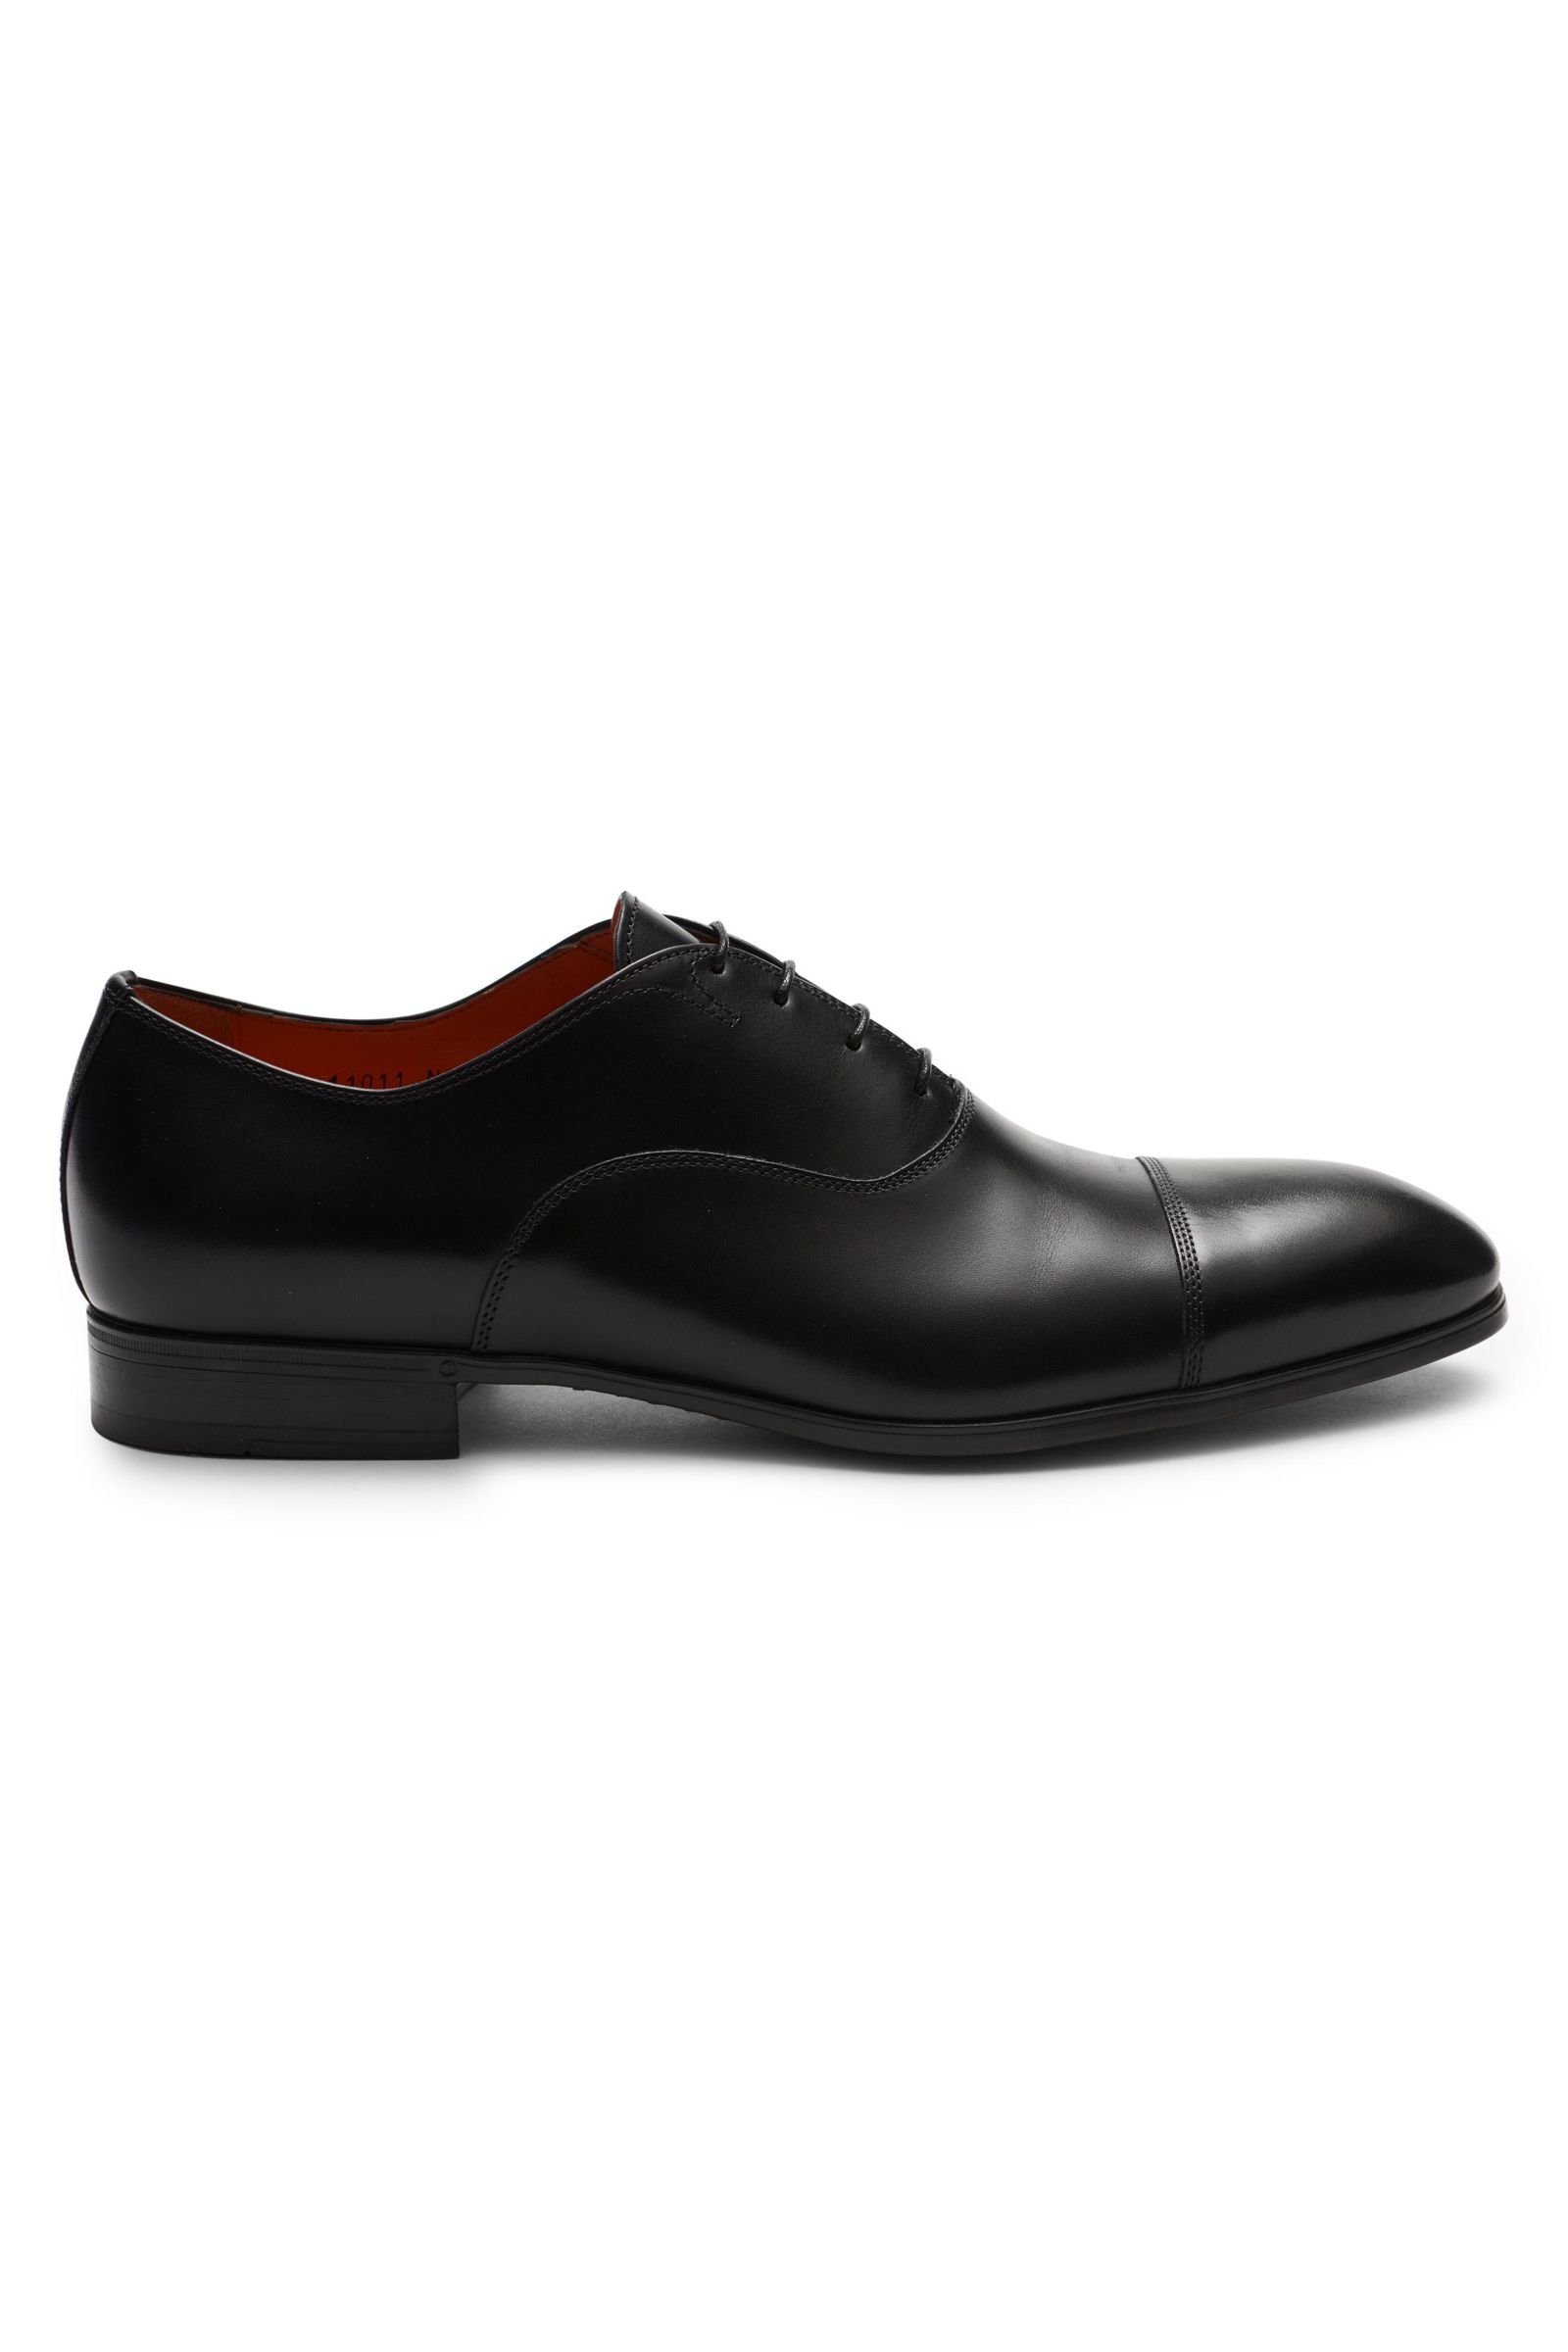 Oxford shoes black